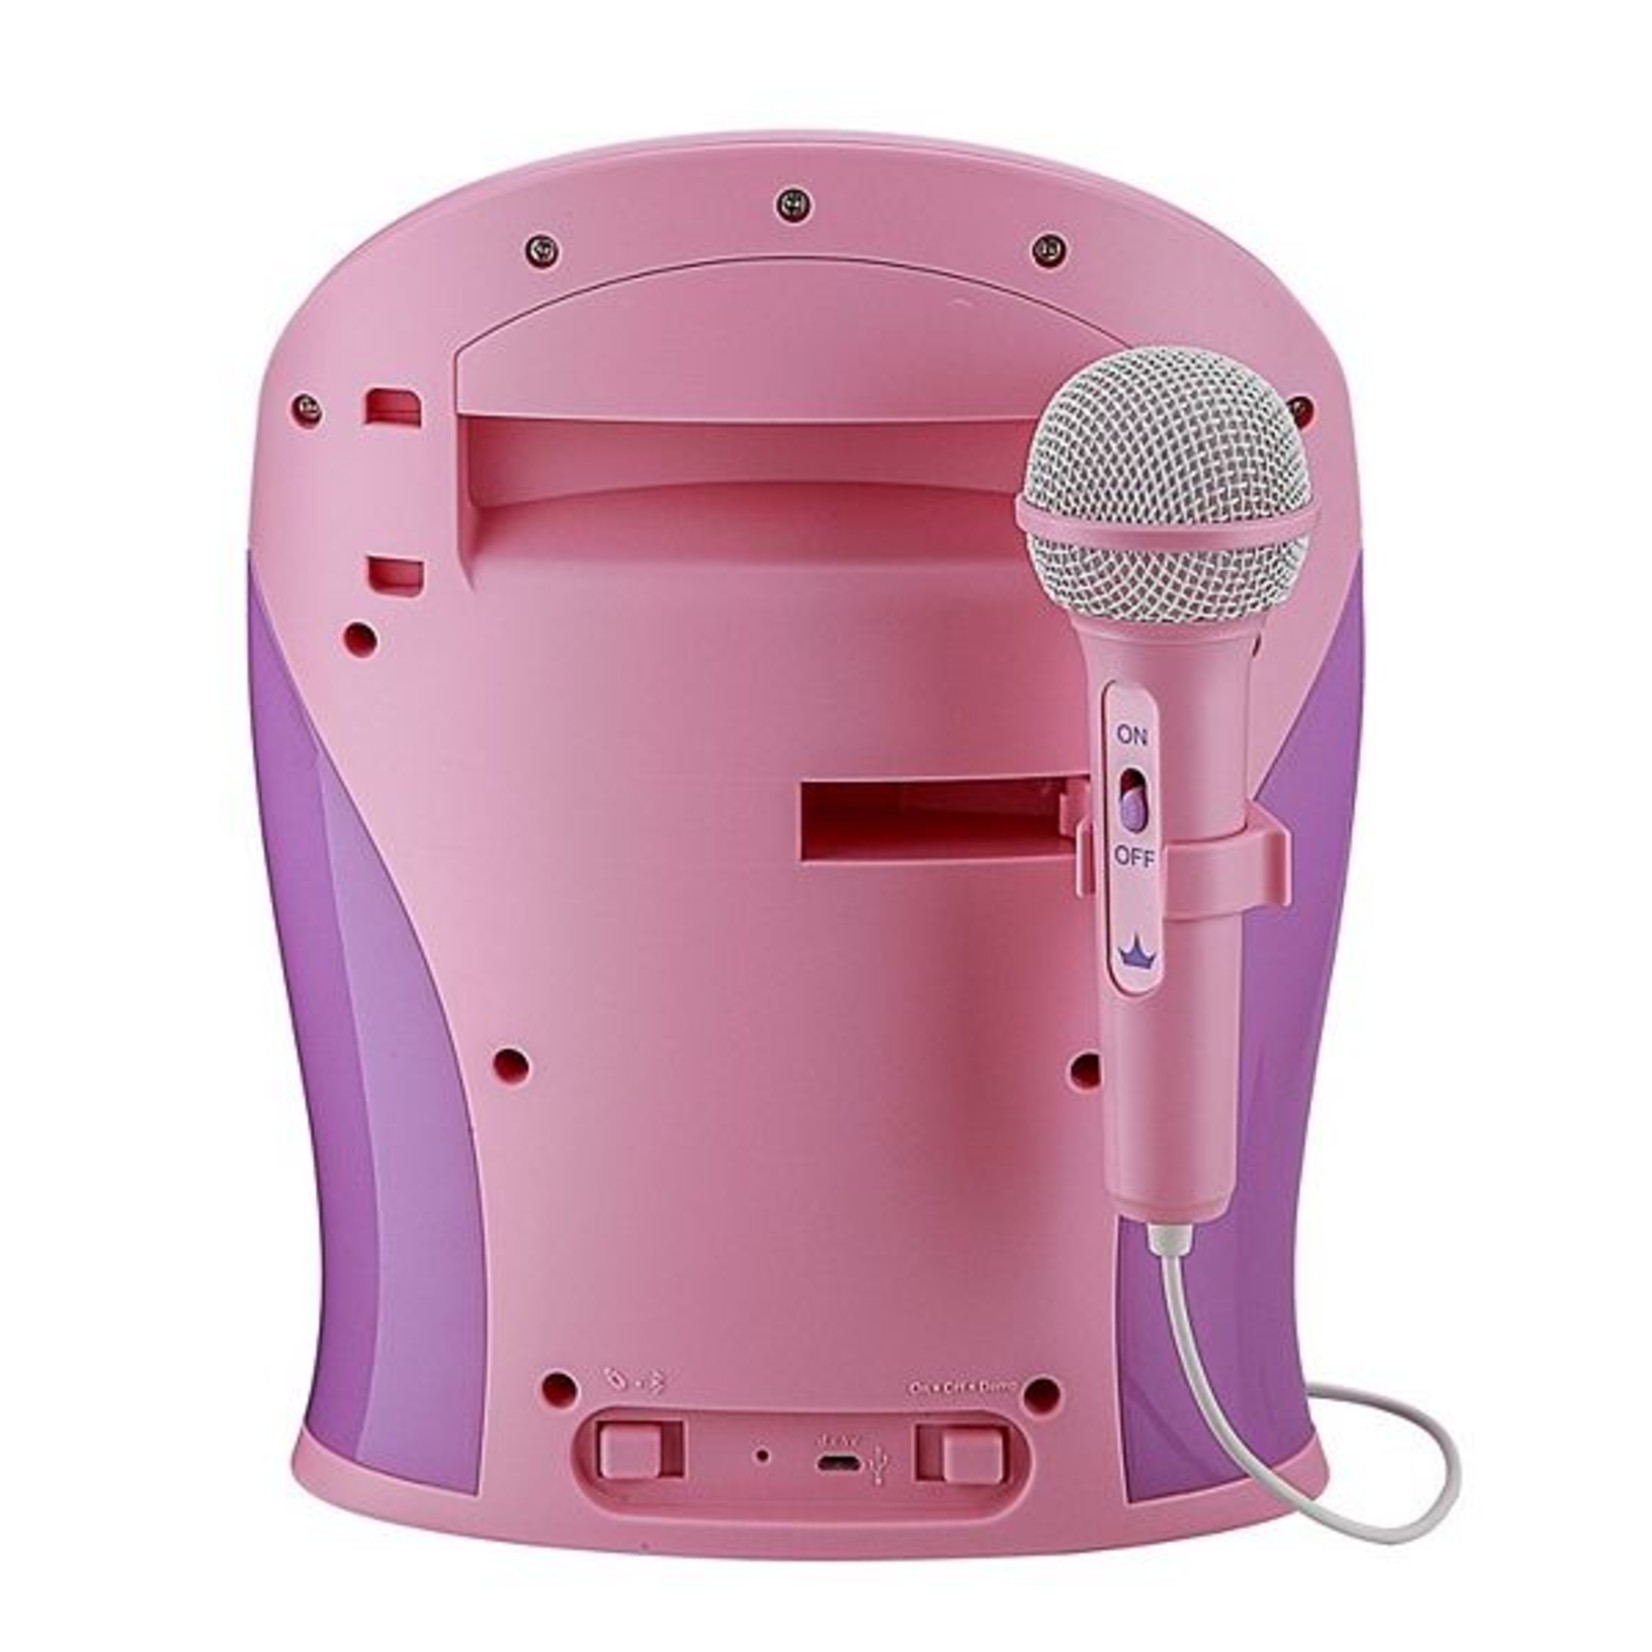 eKids Disney Princess Karaoke Machine